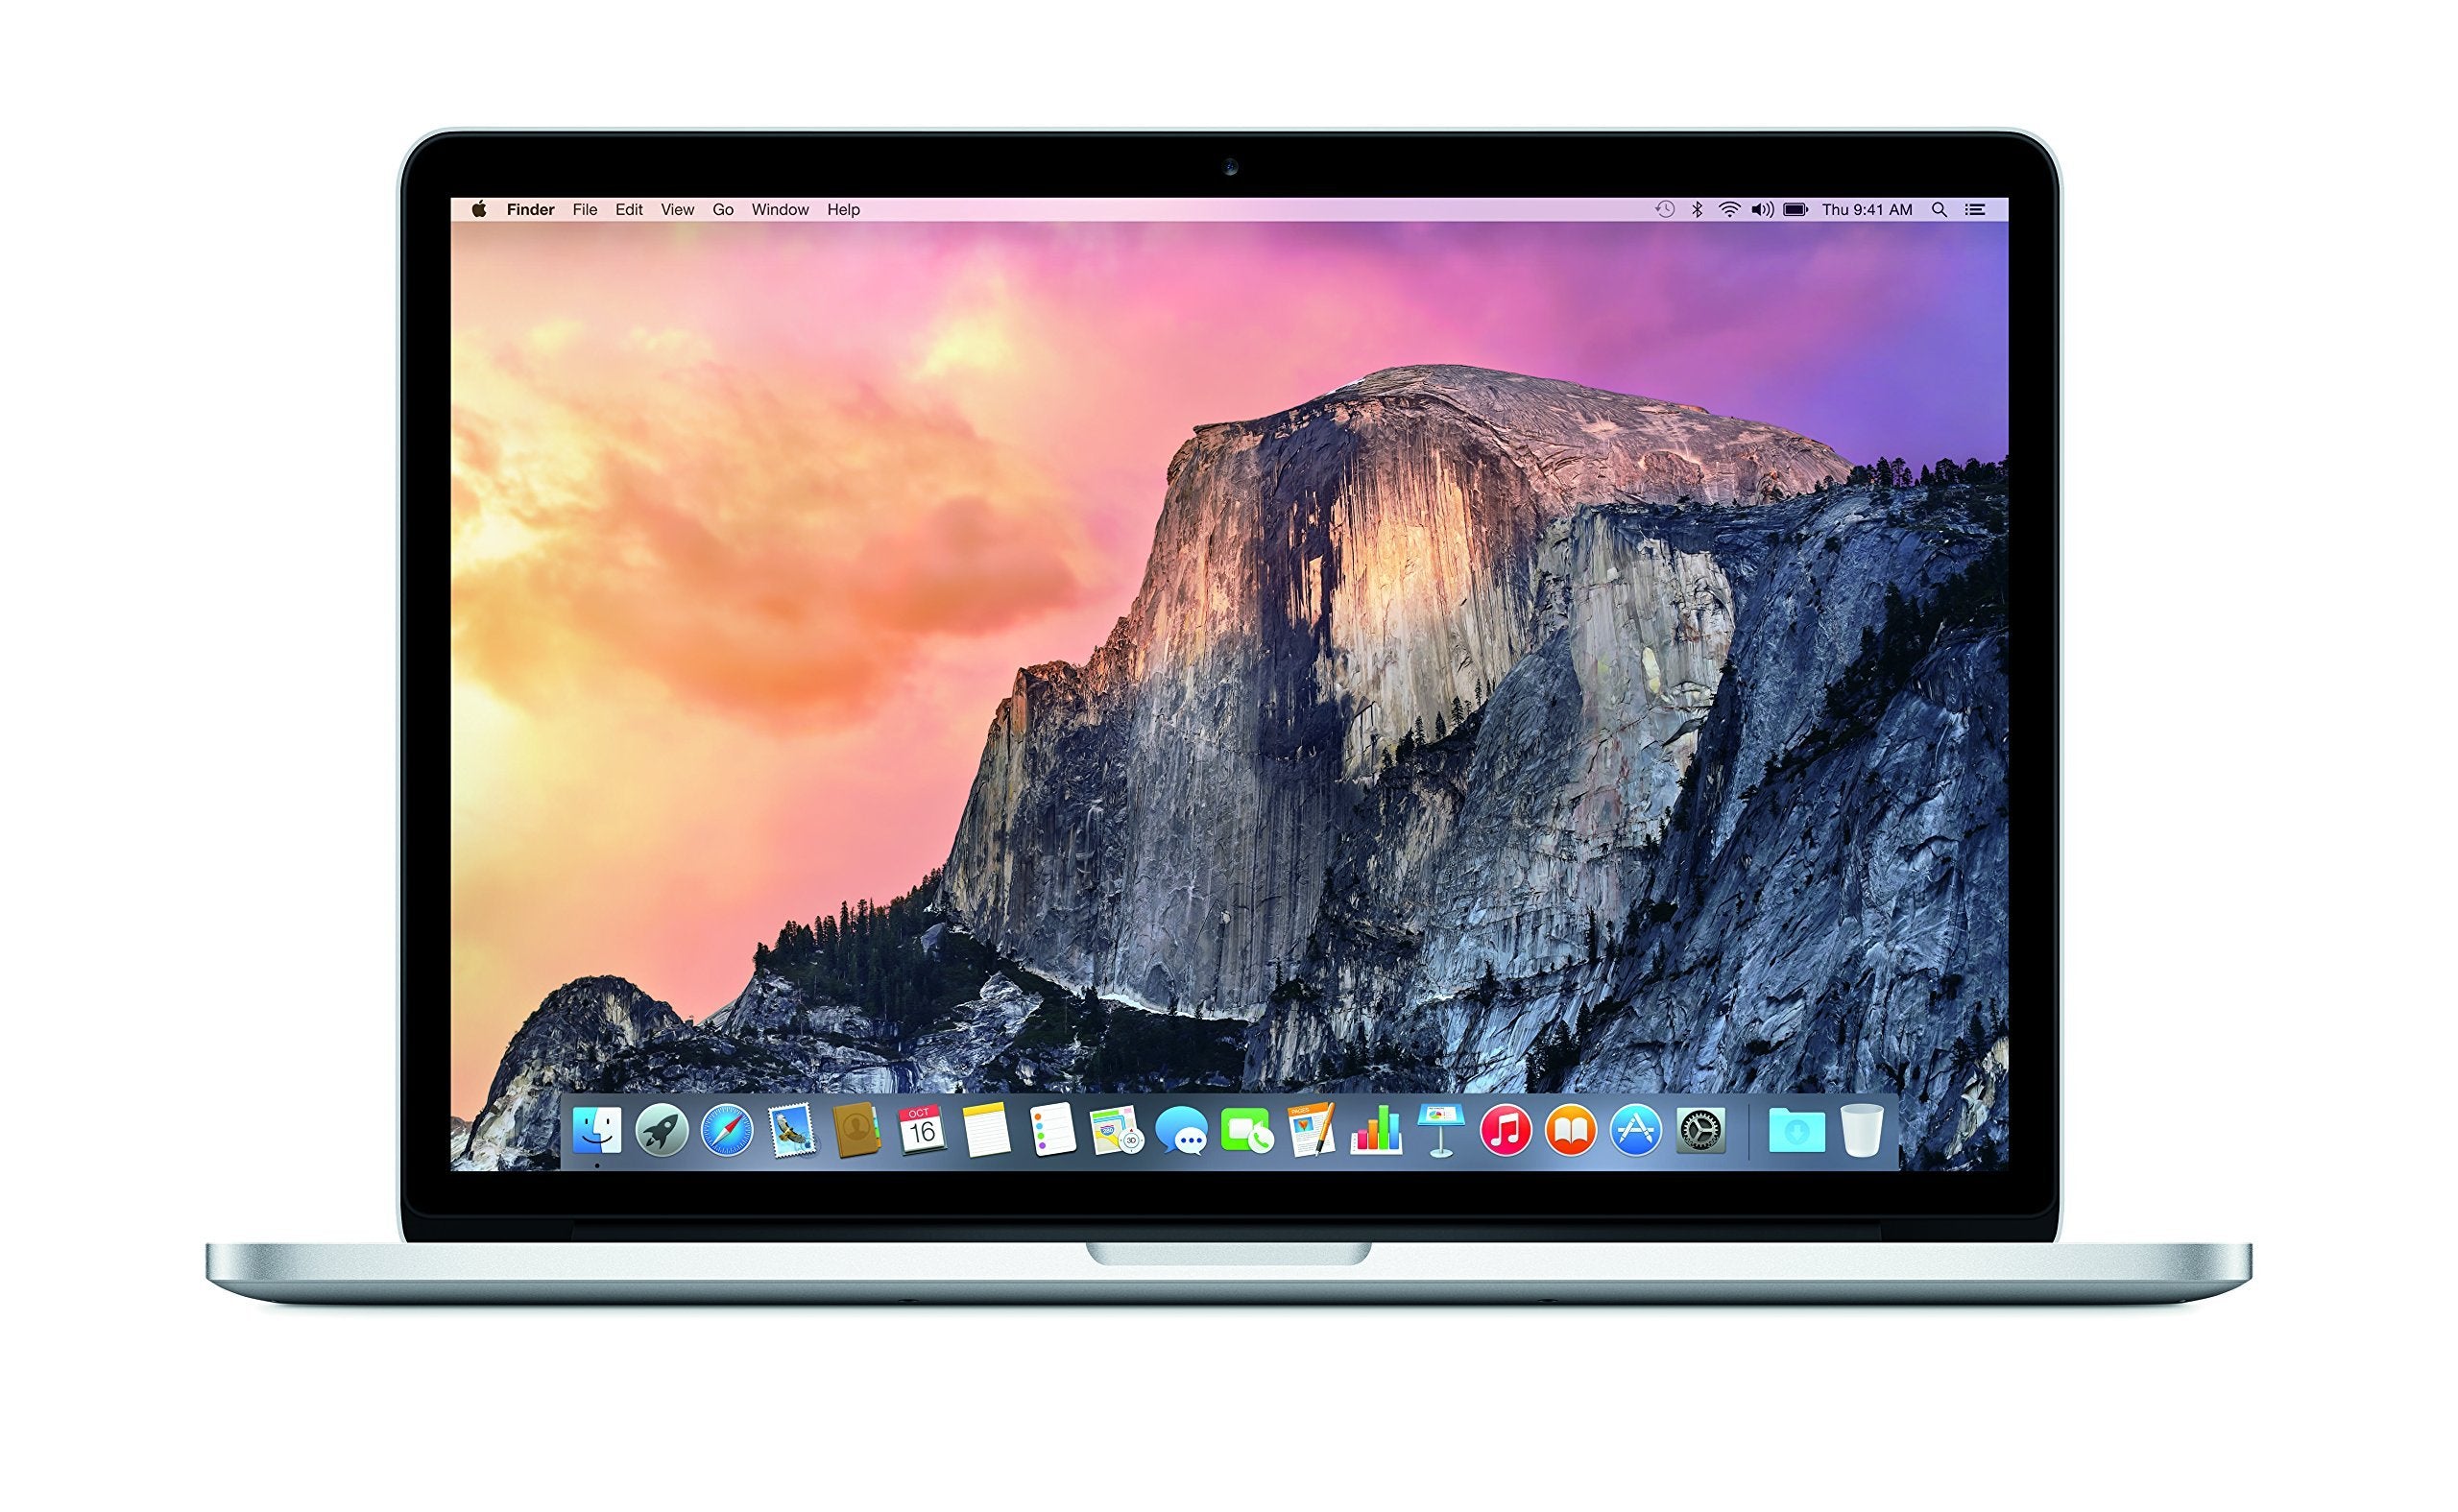 Apple MacBook Pro 15" (Mid 2015) - Core i7 2.5GHz, 16GB RAM, 512GB SSD (Renewed)